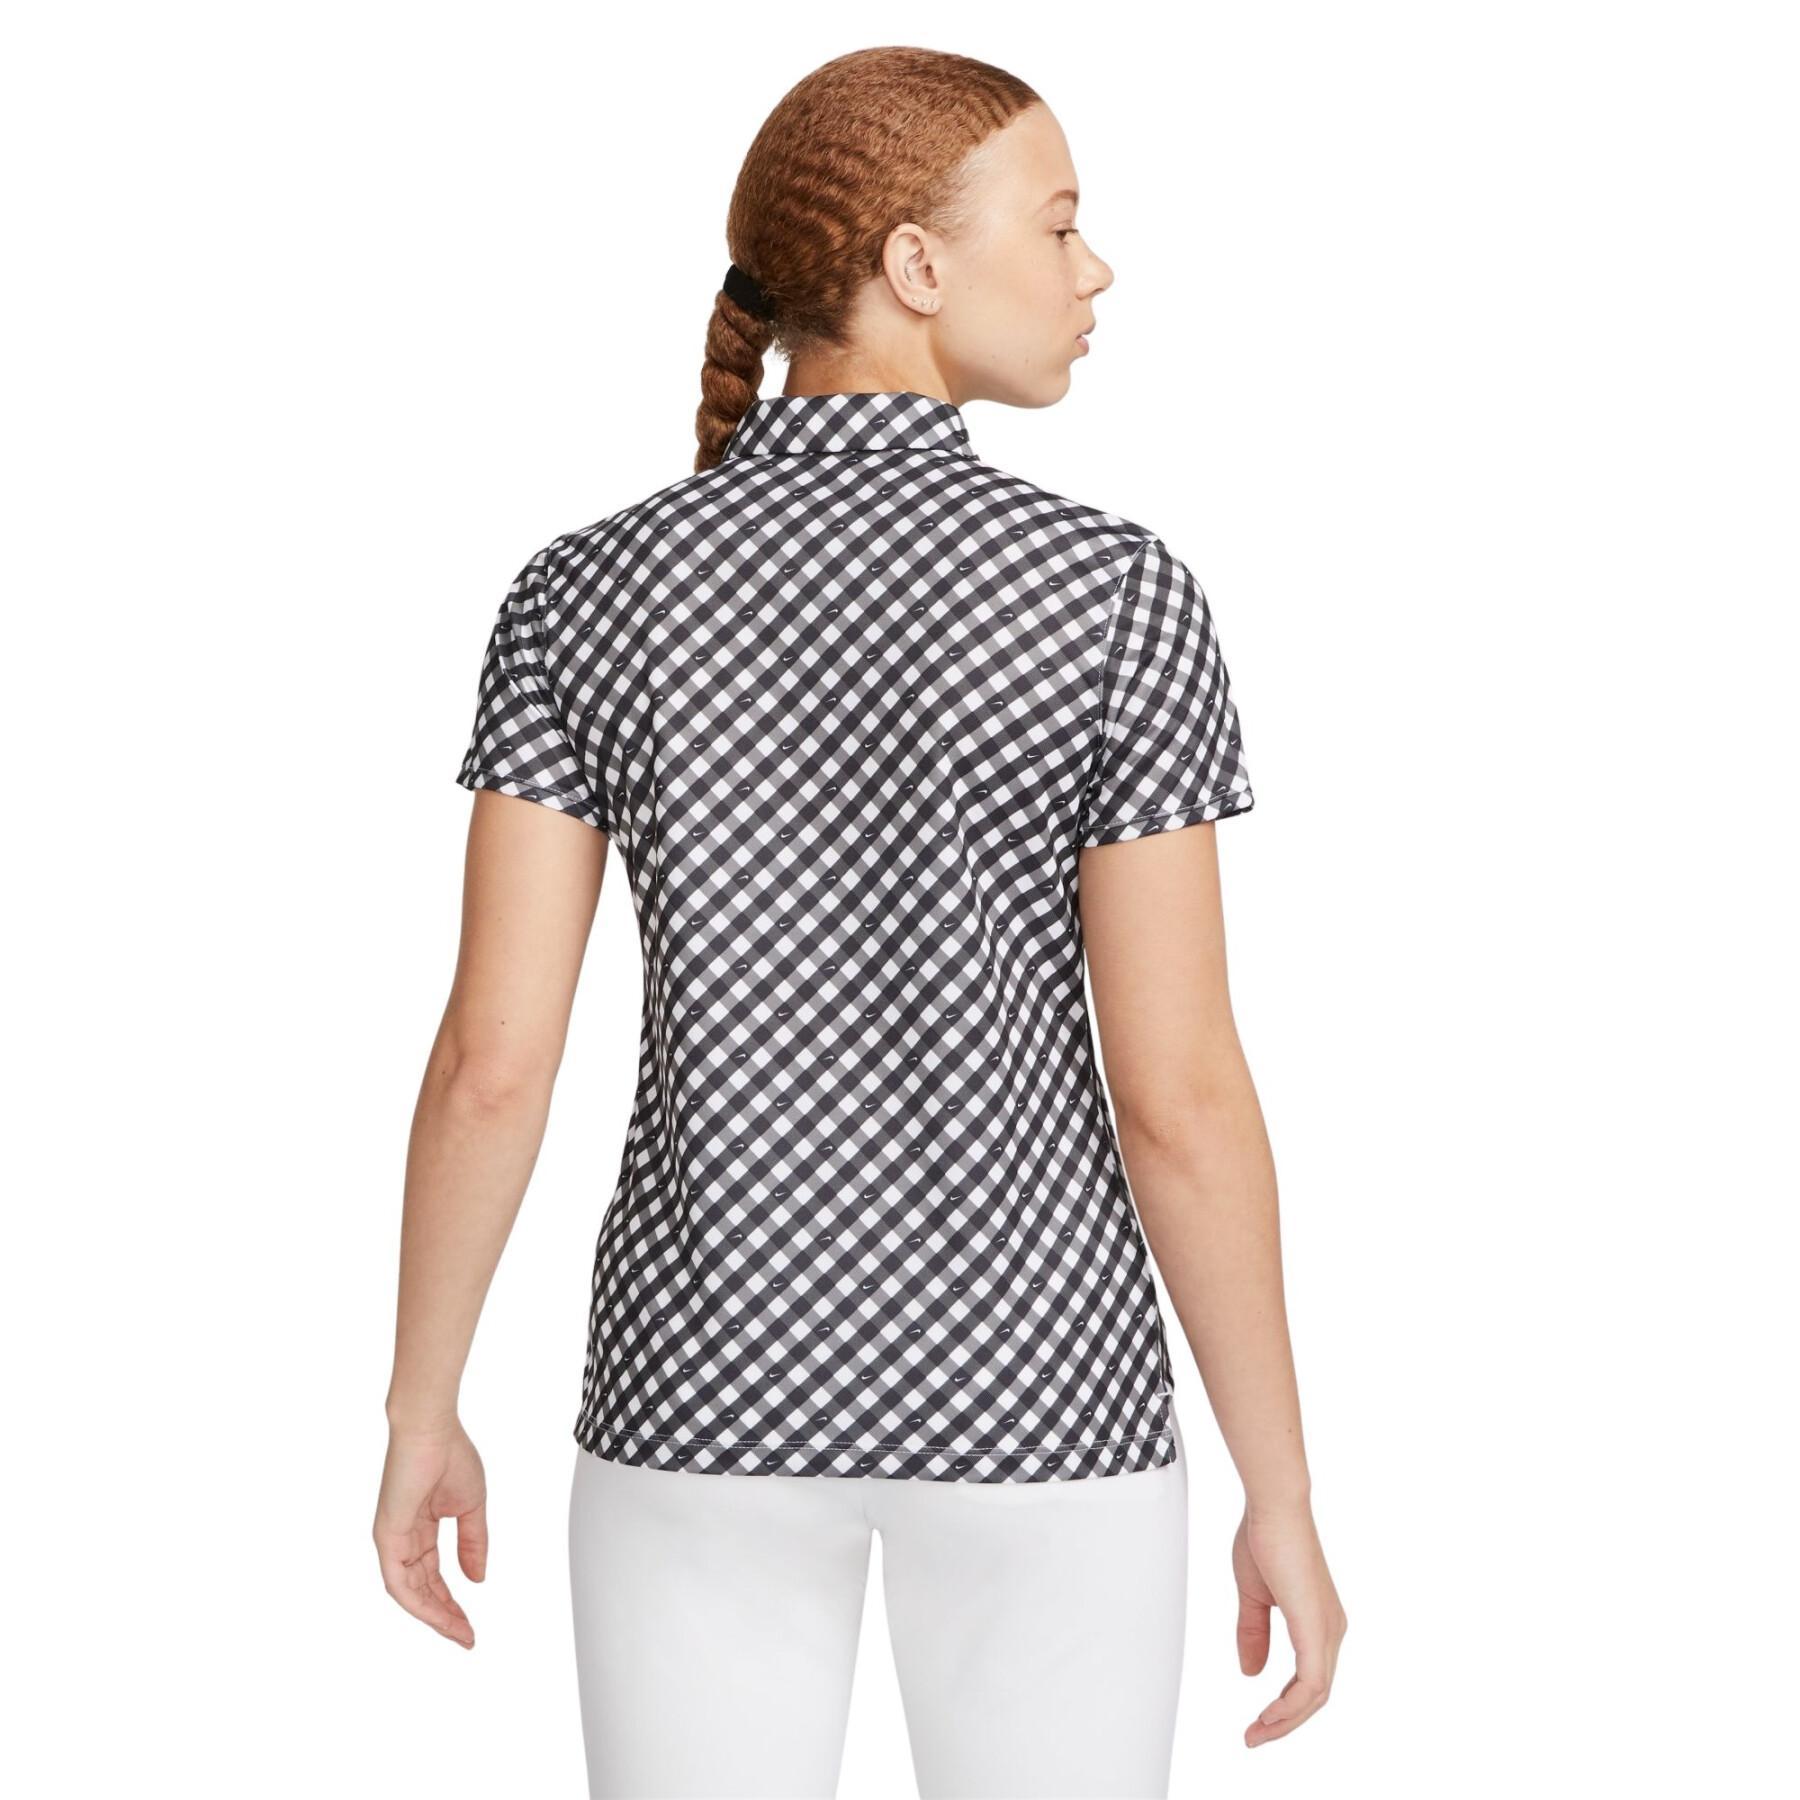 Camisa pólo feminina Nike Victory Golf